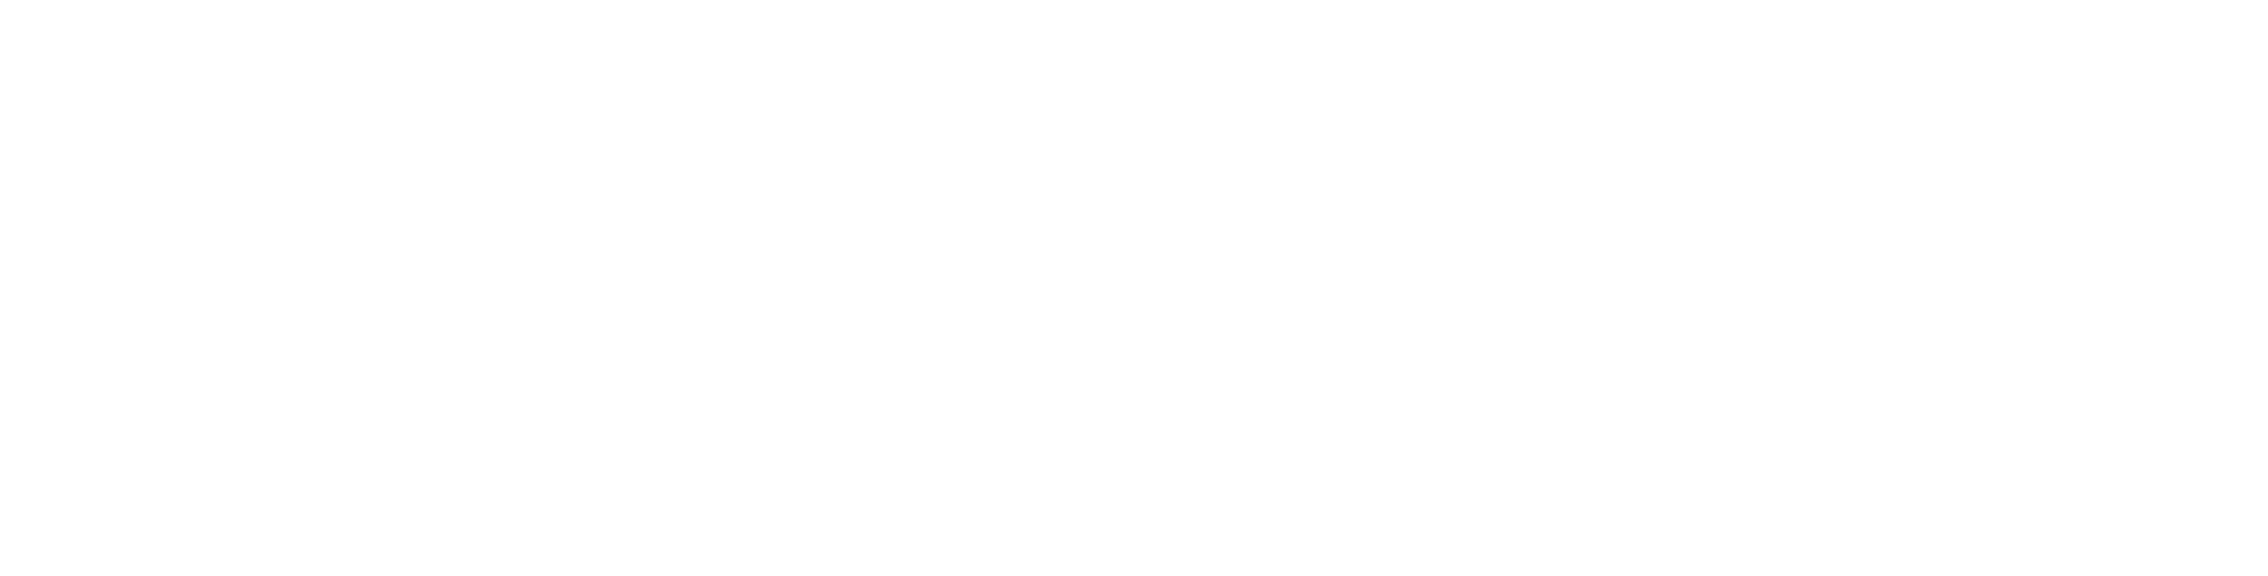 gulf-logo-white.png